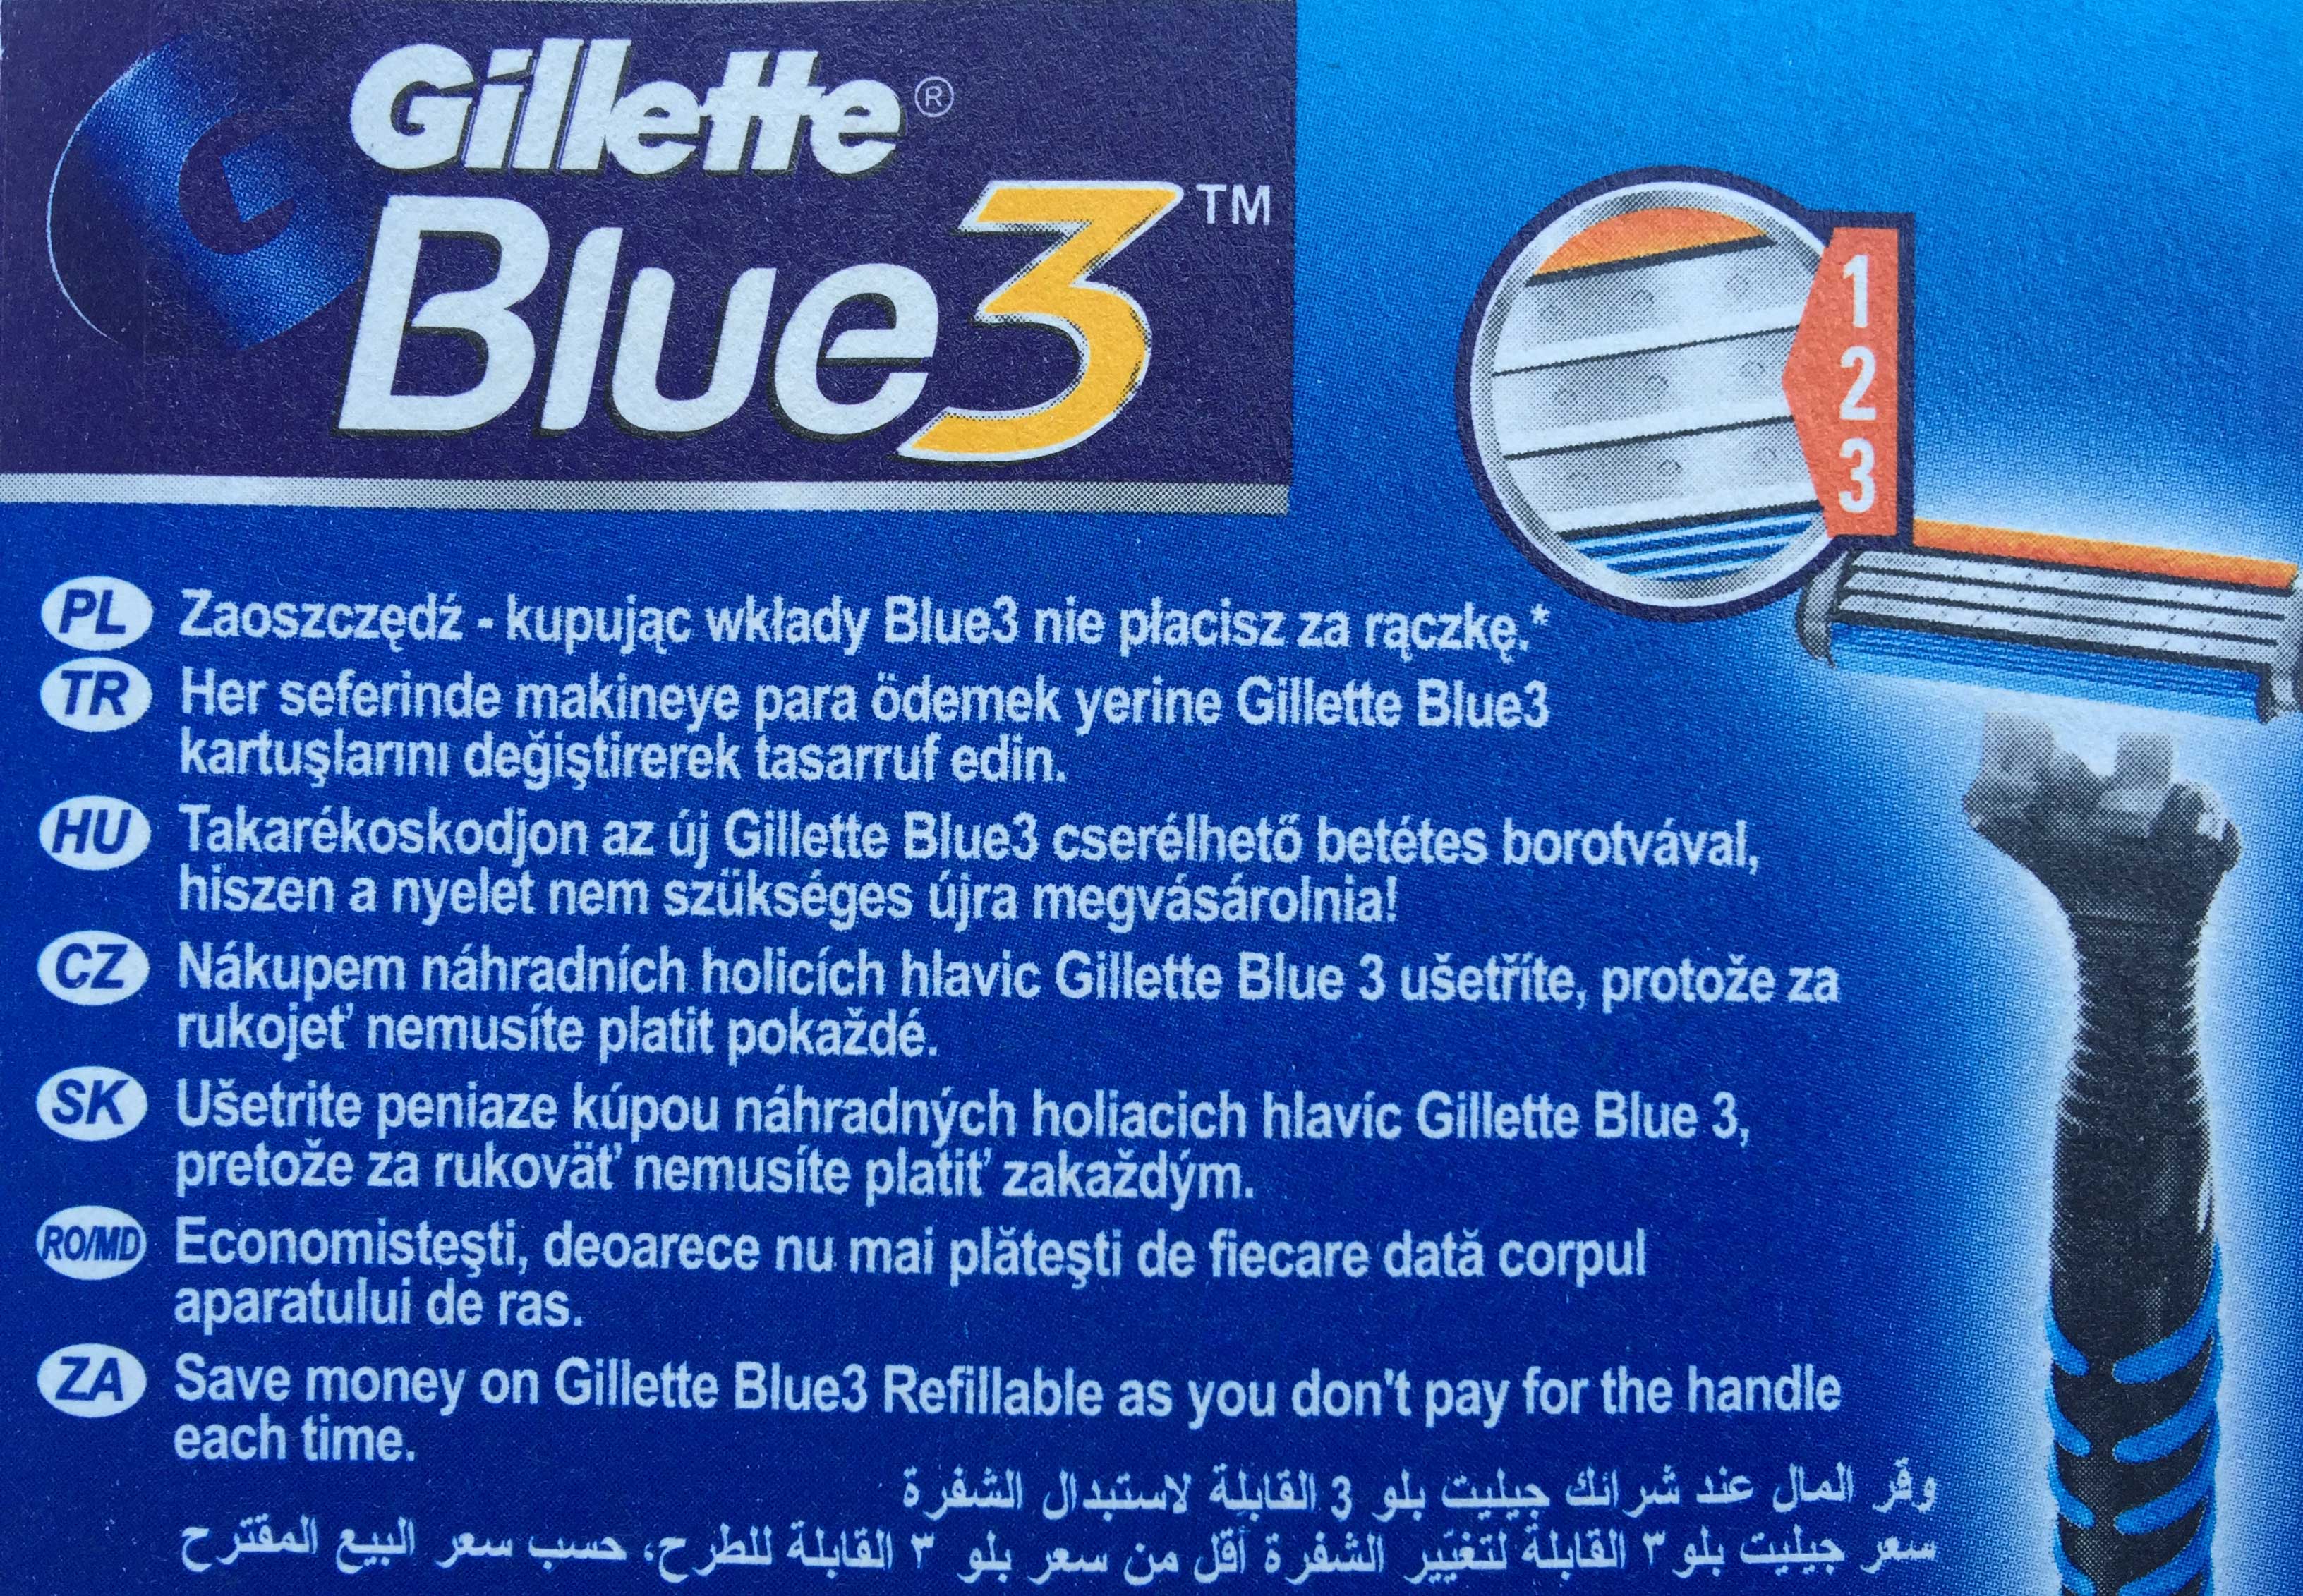 blueIII-background-nondisposable-disposable-razor